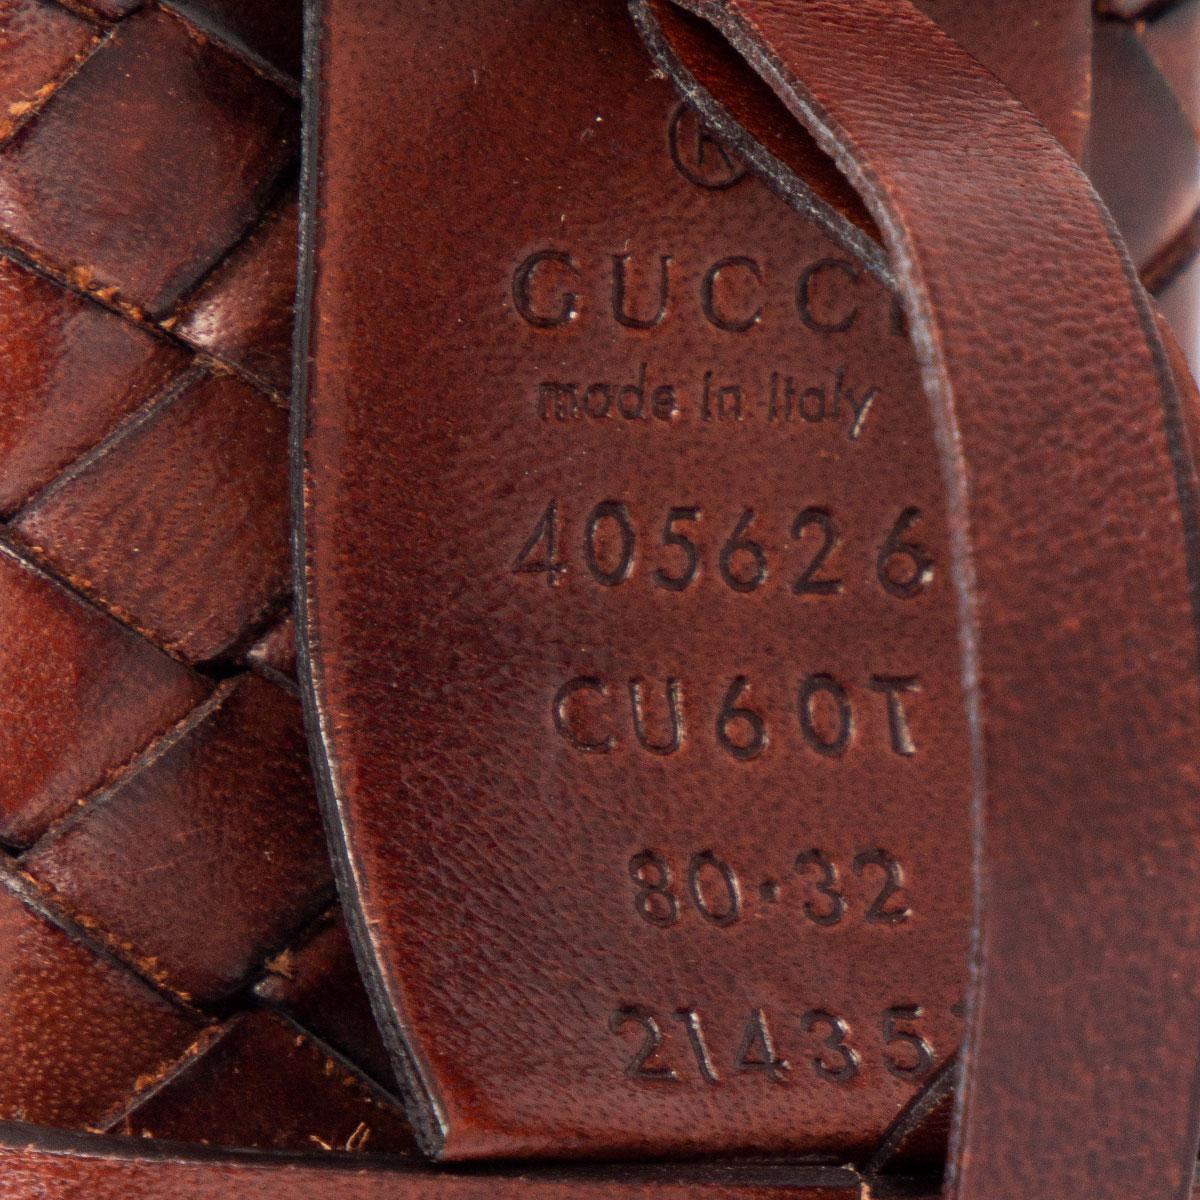 Brown GUCCI chestnut brown leather BRAIDED GG BUCKLE BELT 80